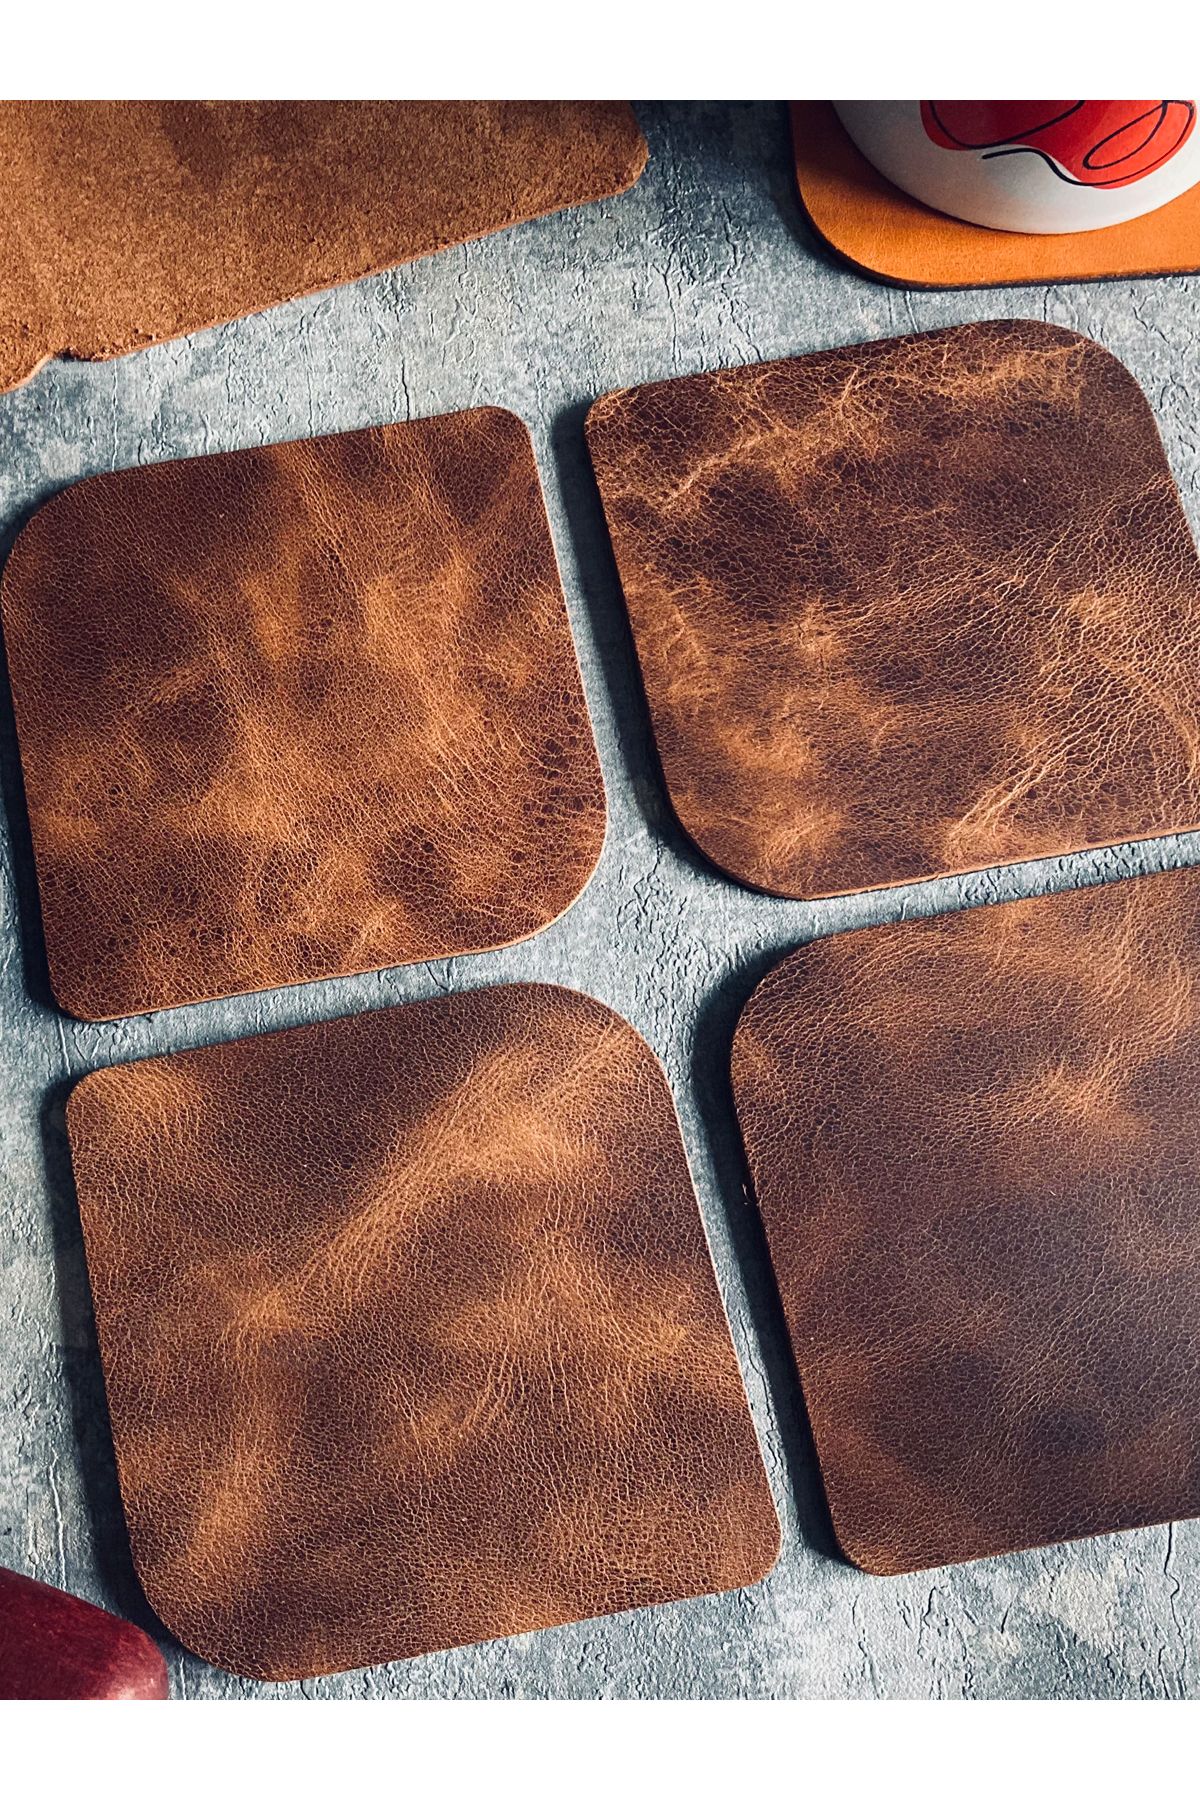 Set of 4 Genuine Leather Oval Coasters | Bretya Leather - Tan